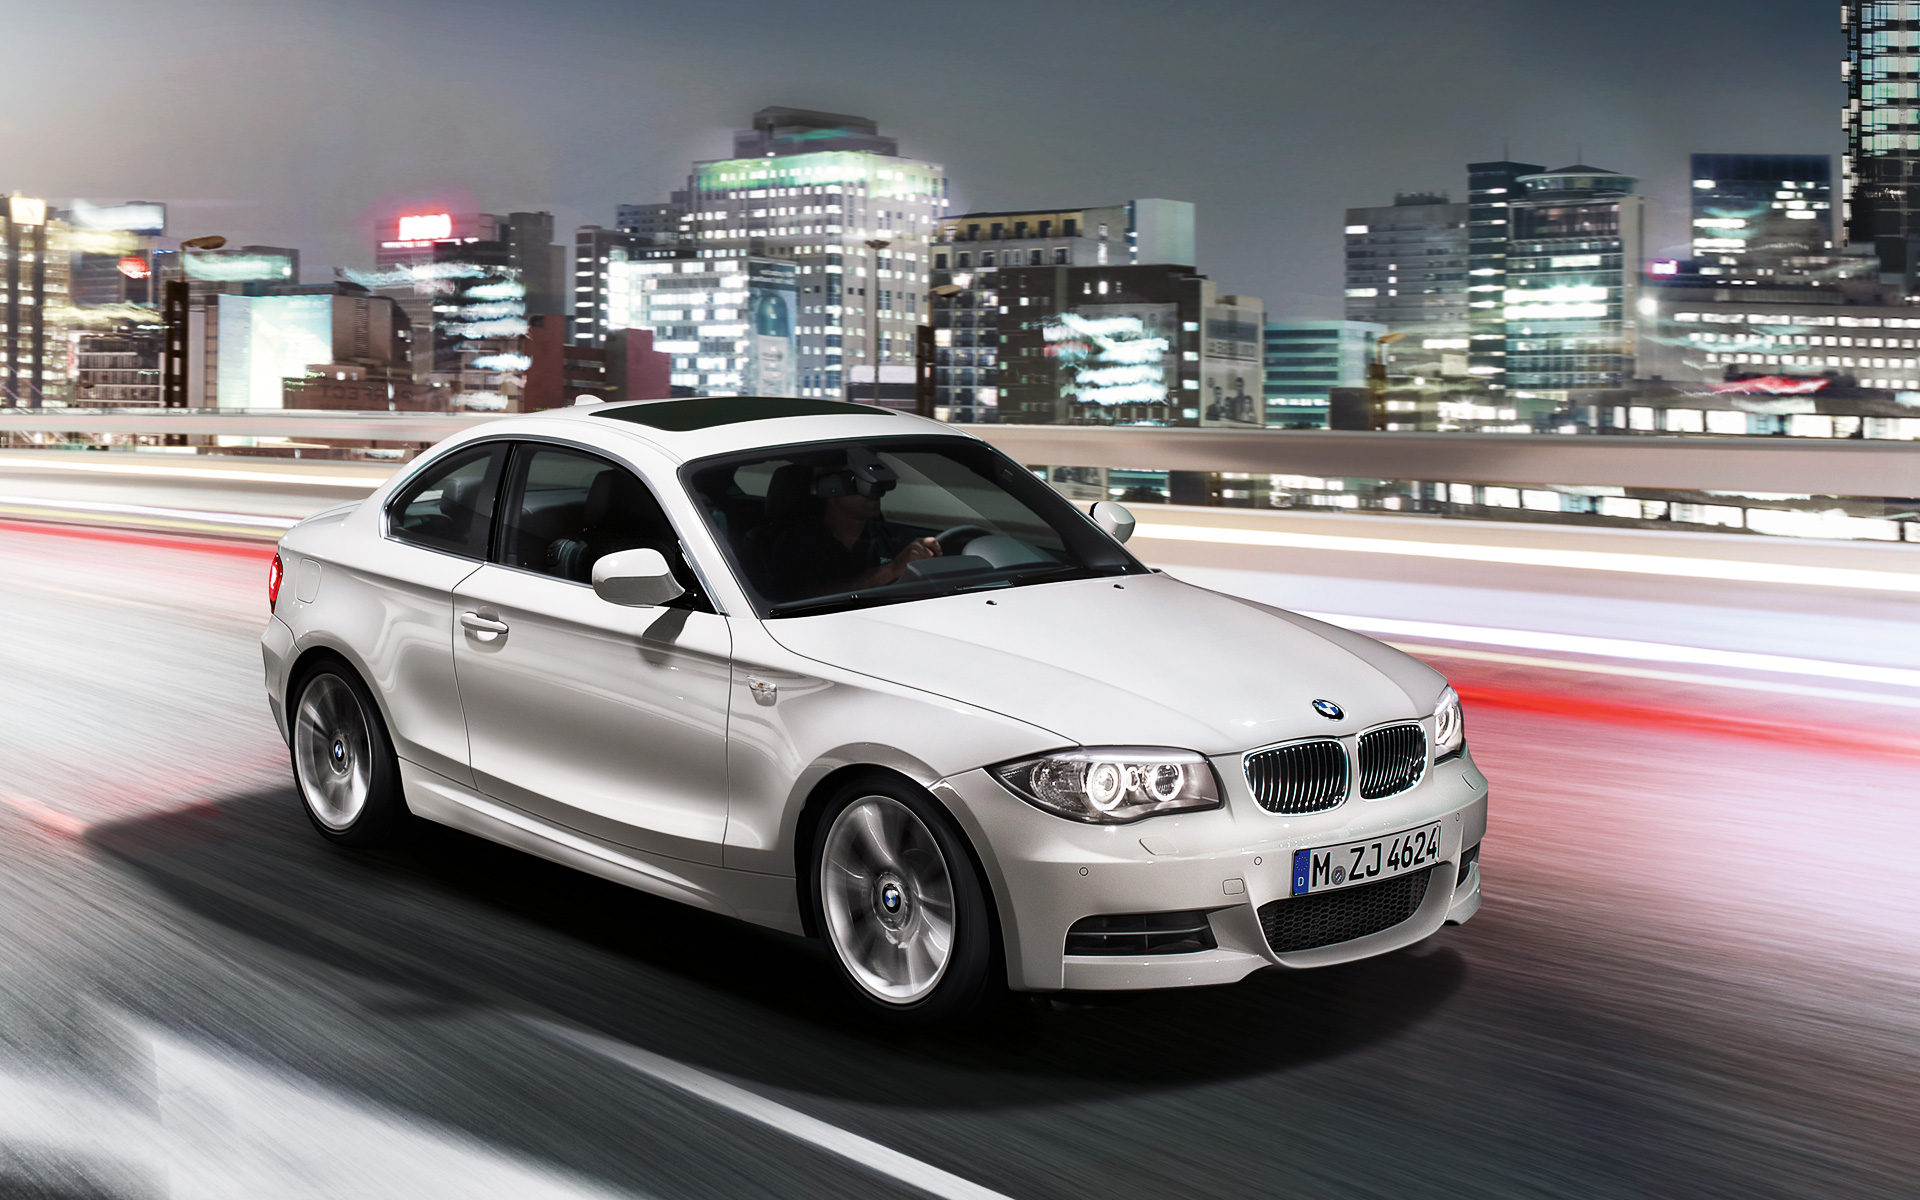 BMW_1series_coupe_wallpaper_06_1920x1200.jpg?download=true